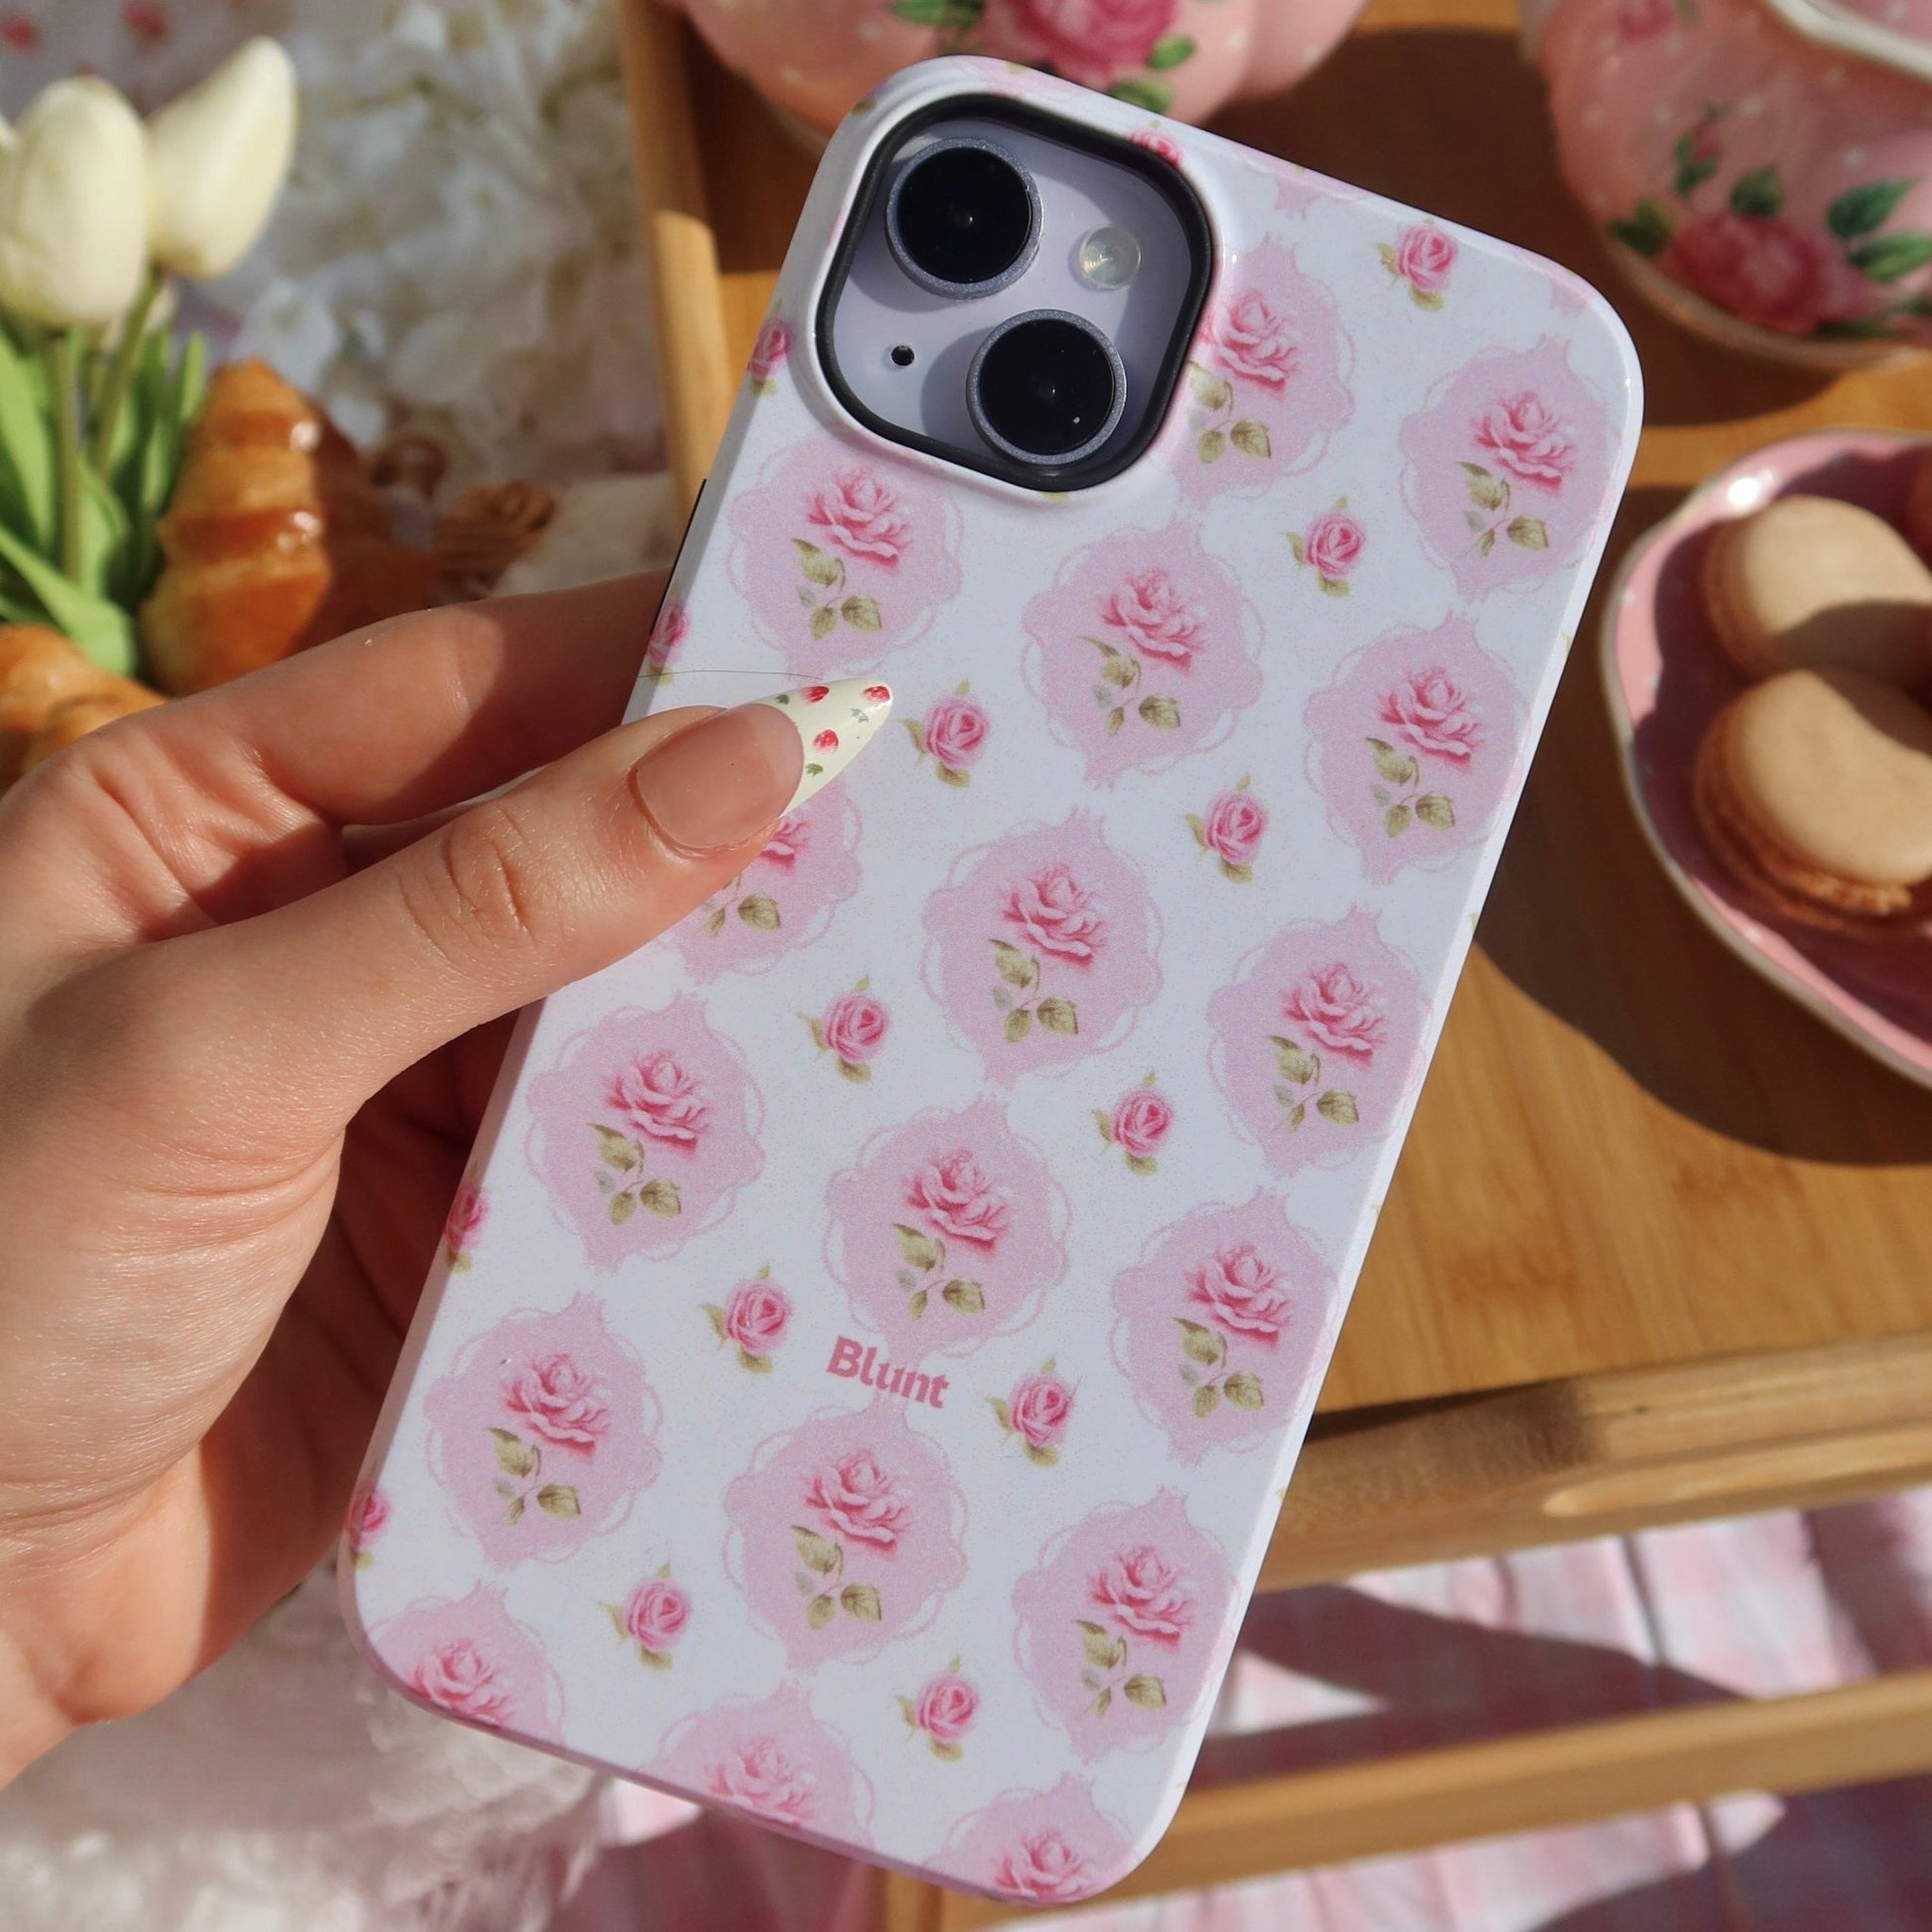 Garden Rose iPhone Case - blunt cases